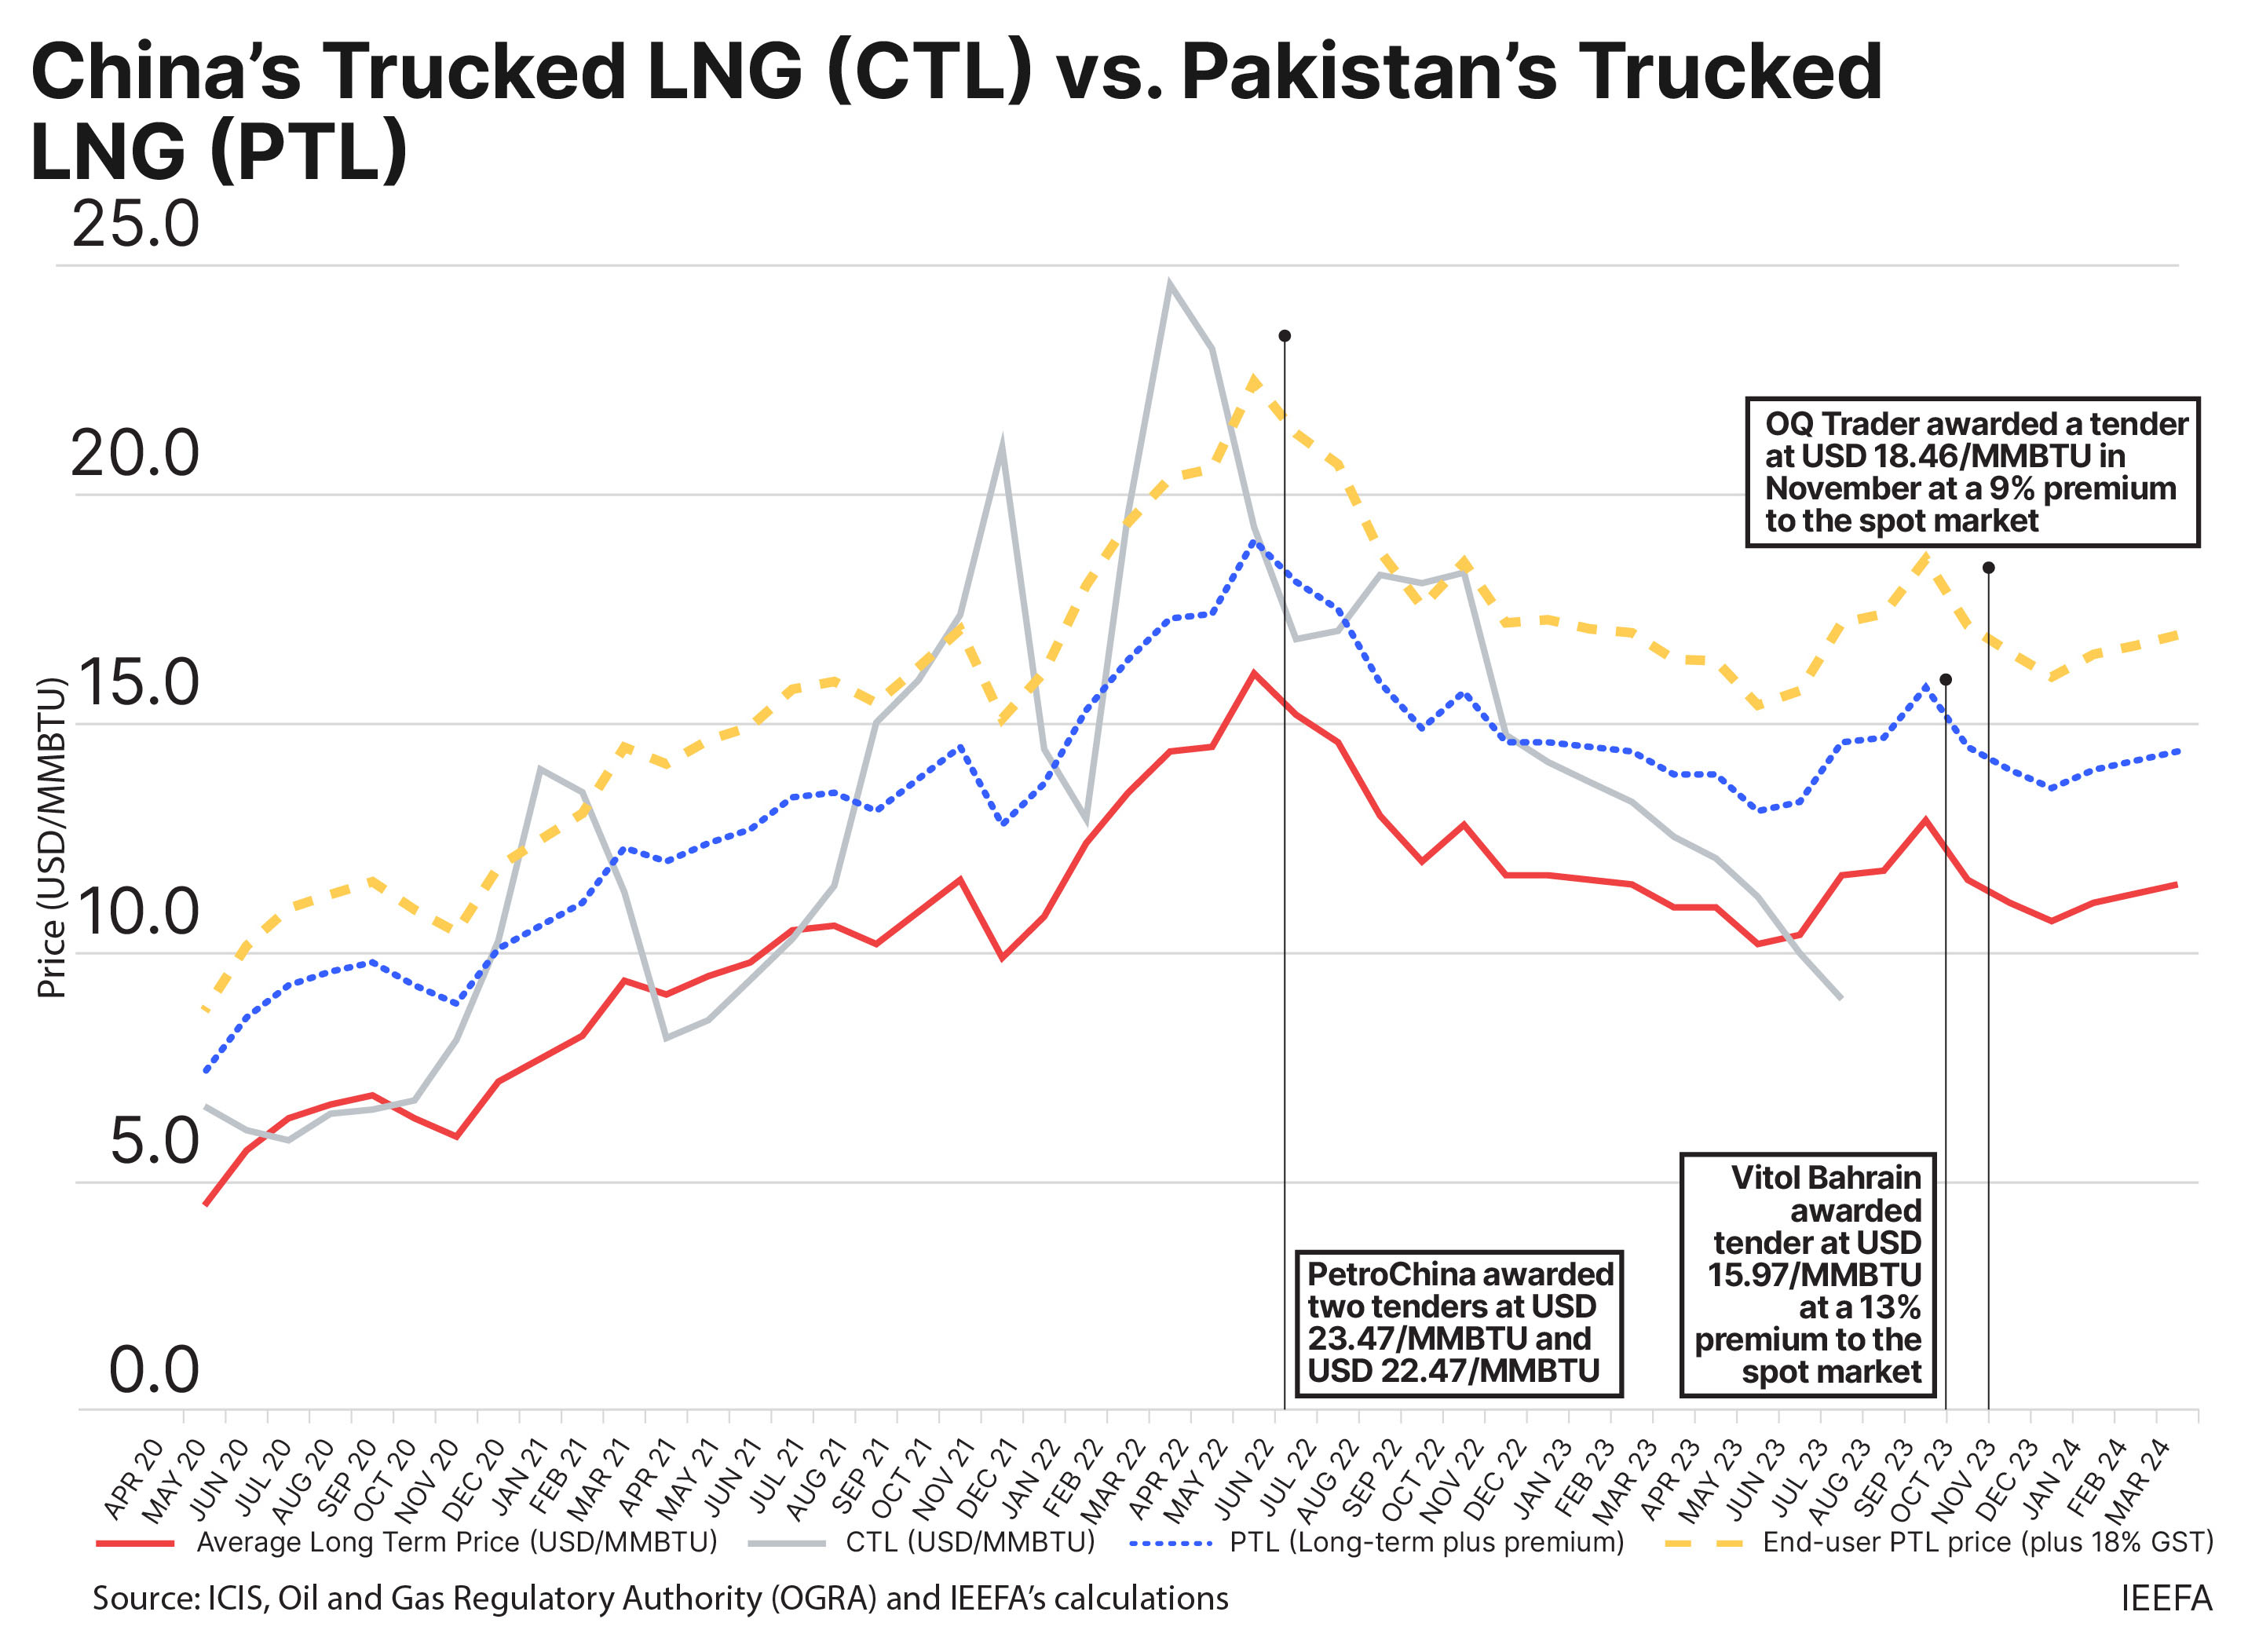 China's trucked LNG vs Pakistan's trucked LNG